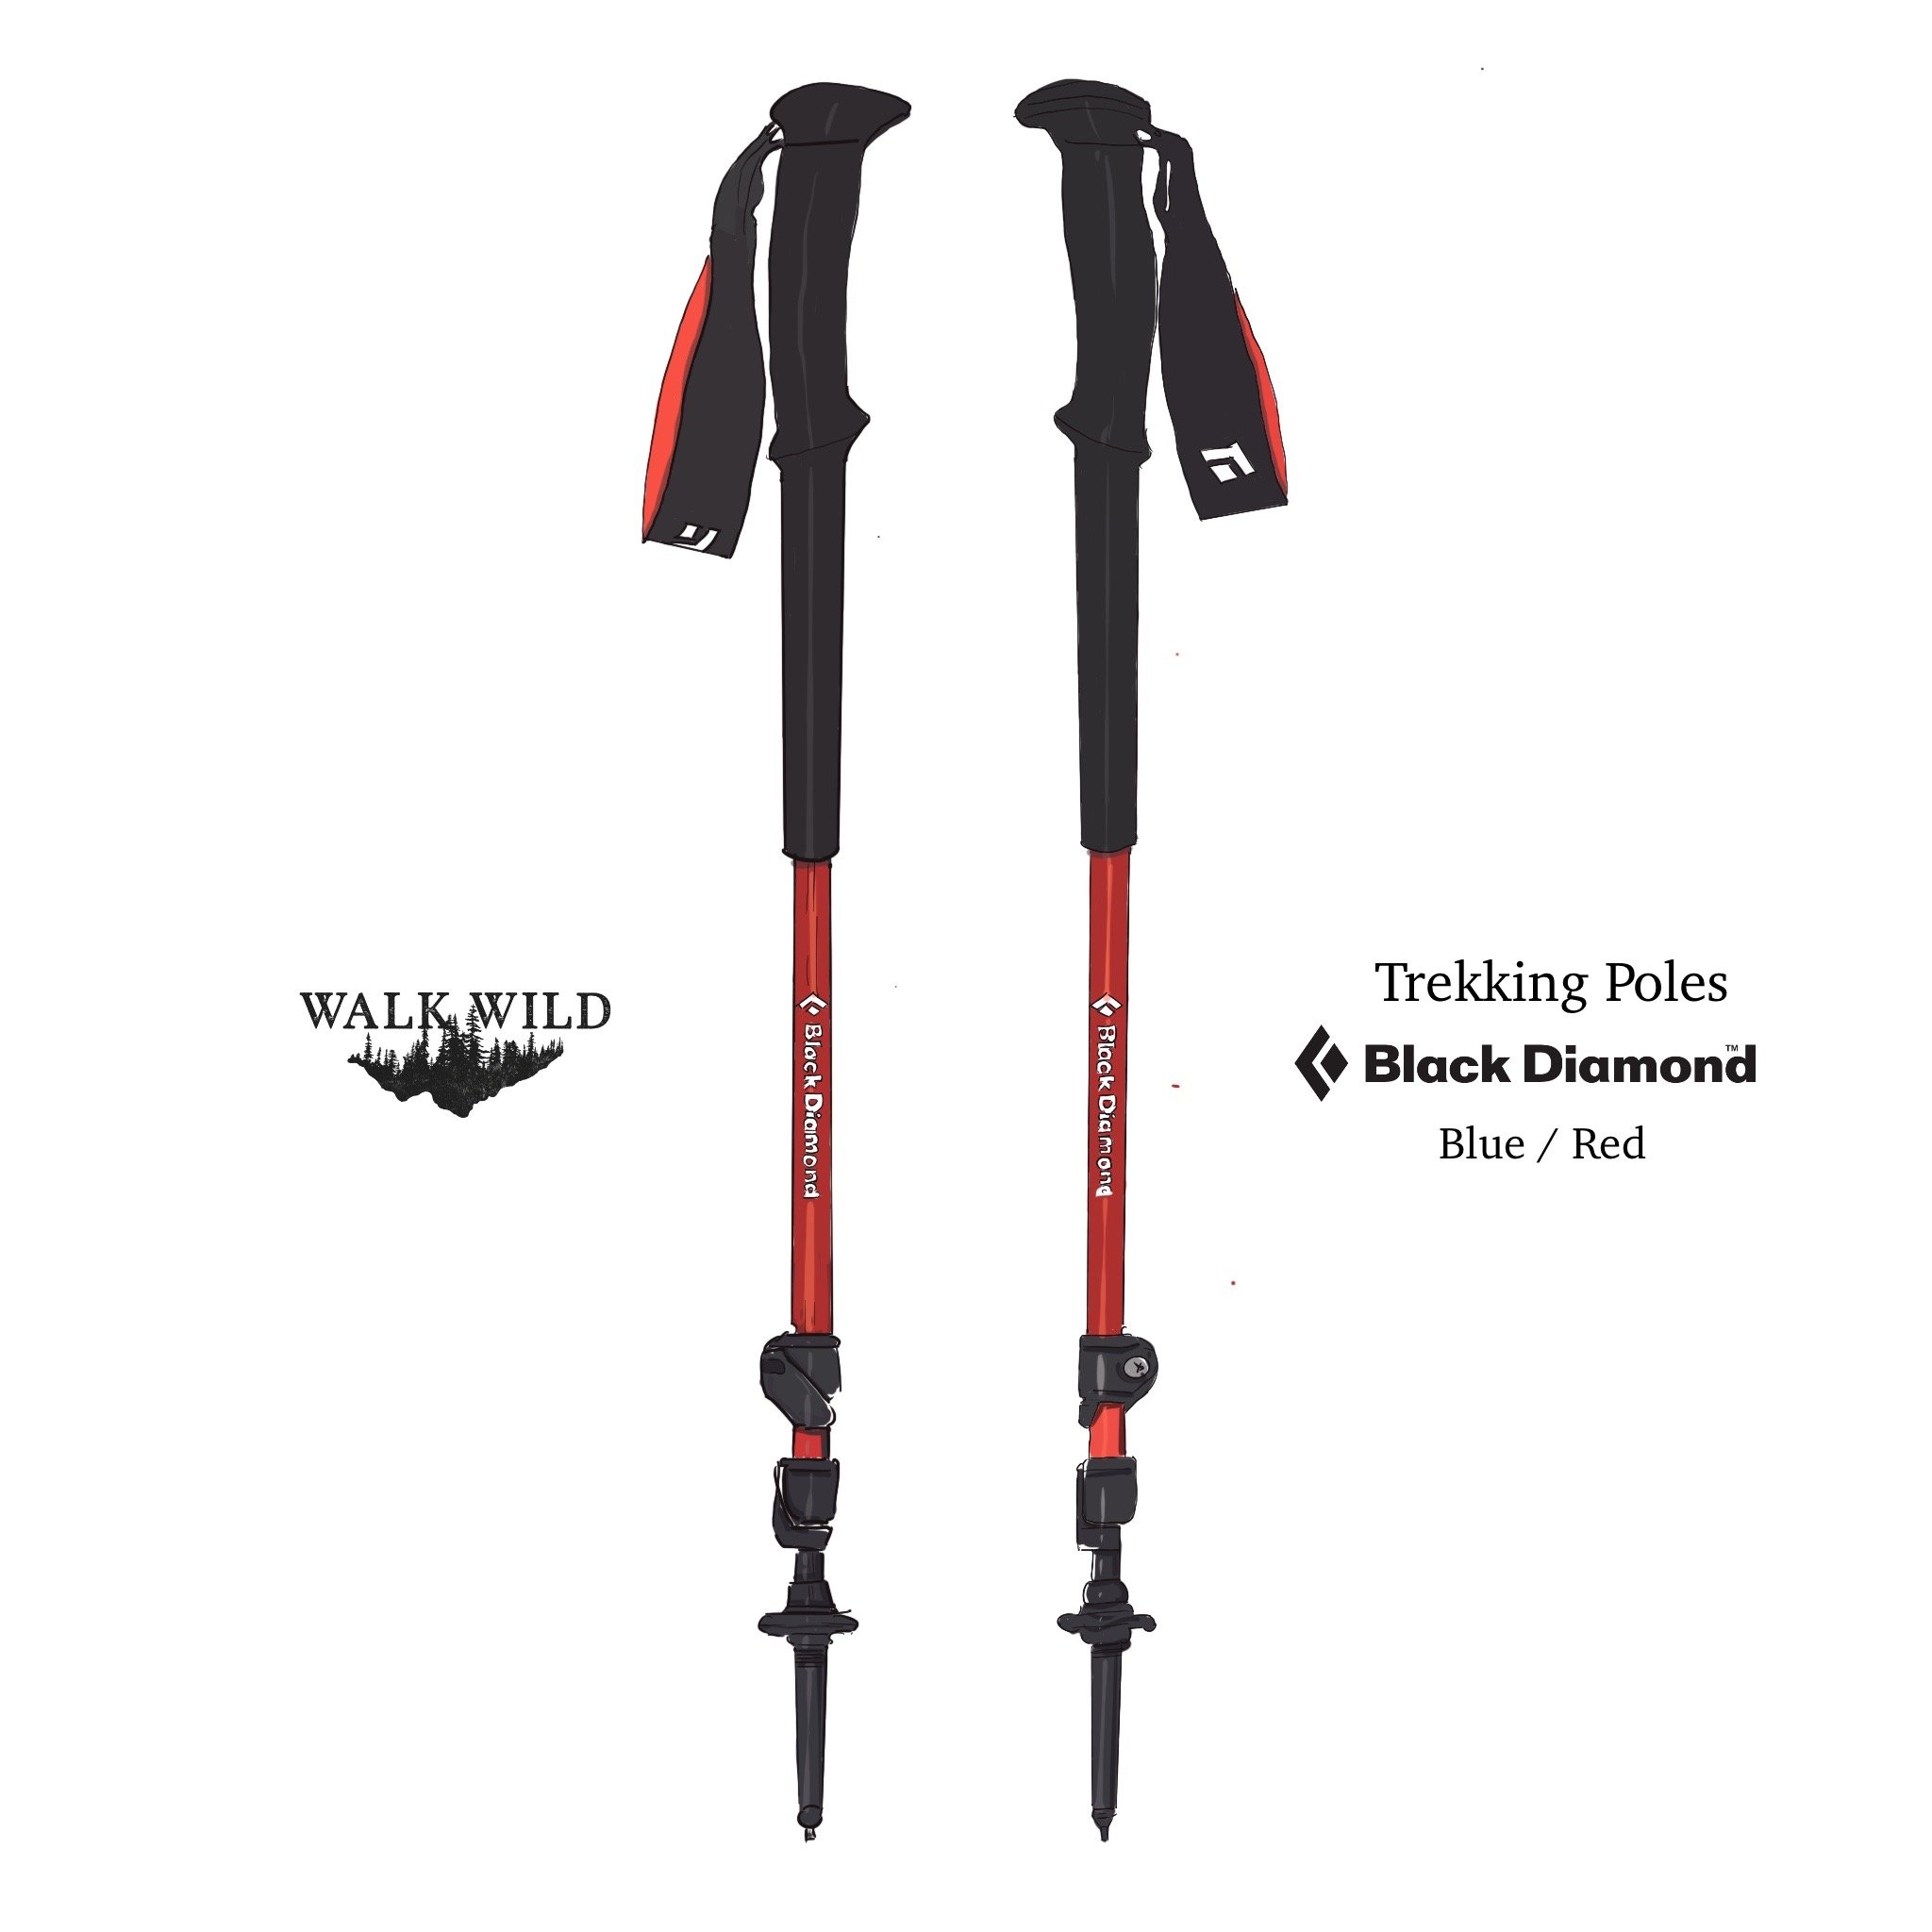 Black Diamond Trekking Poles - £8